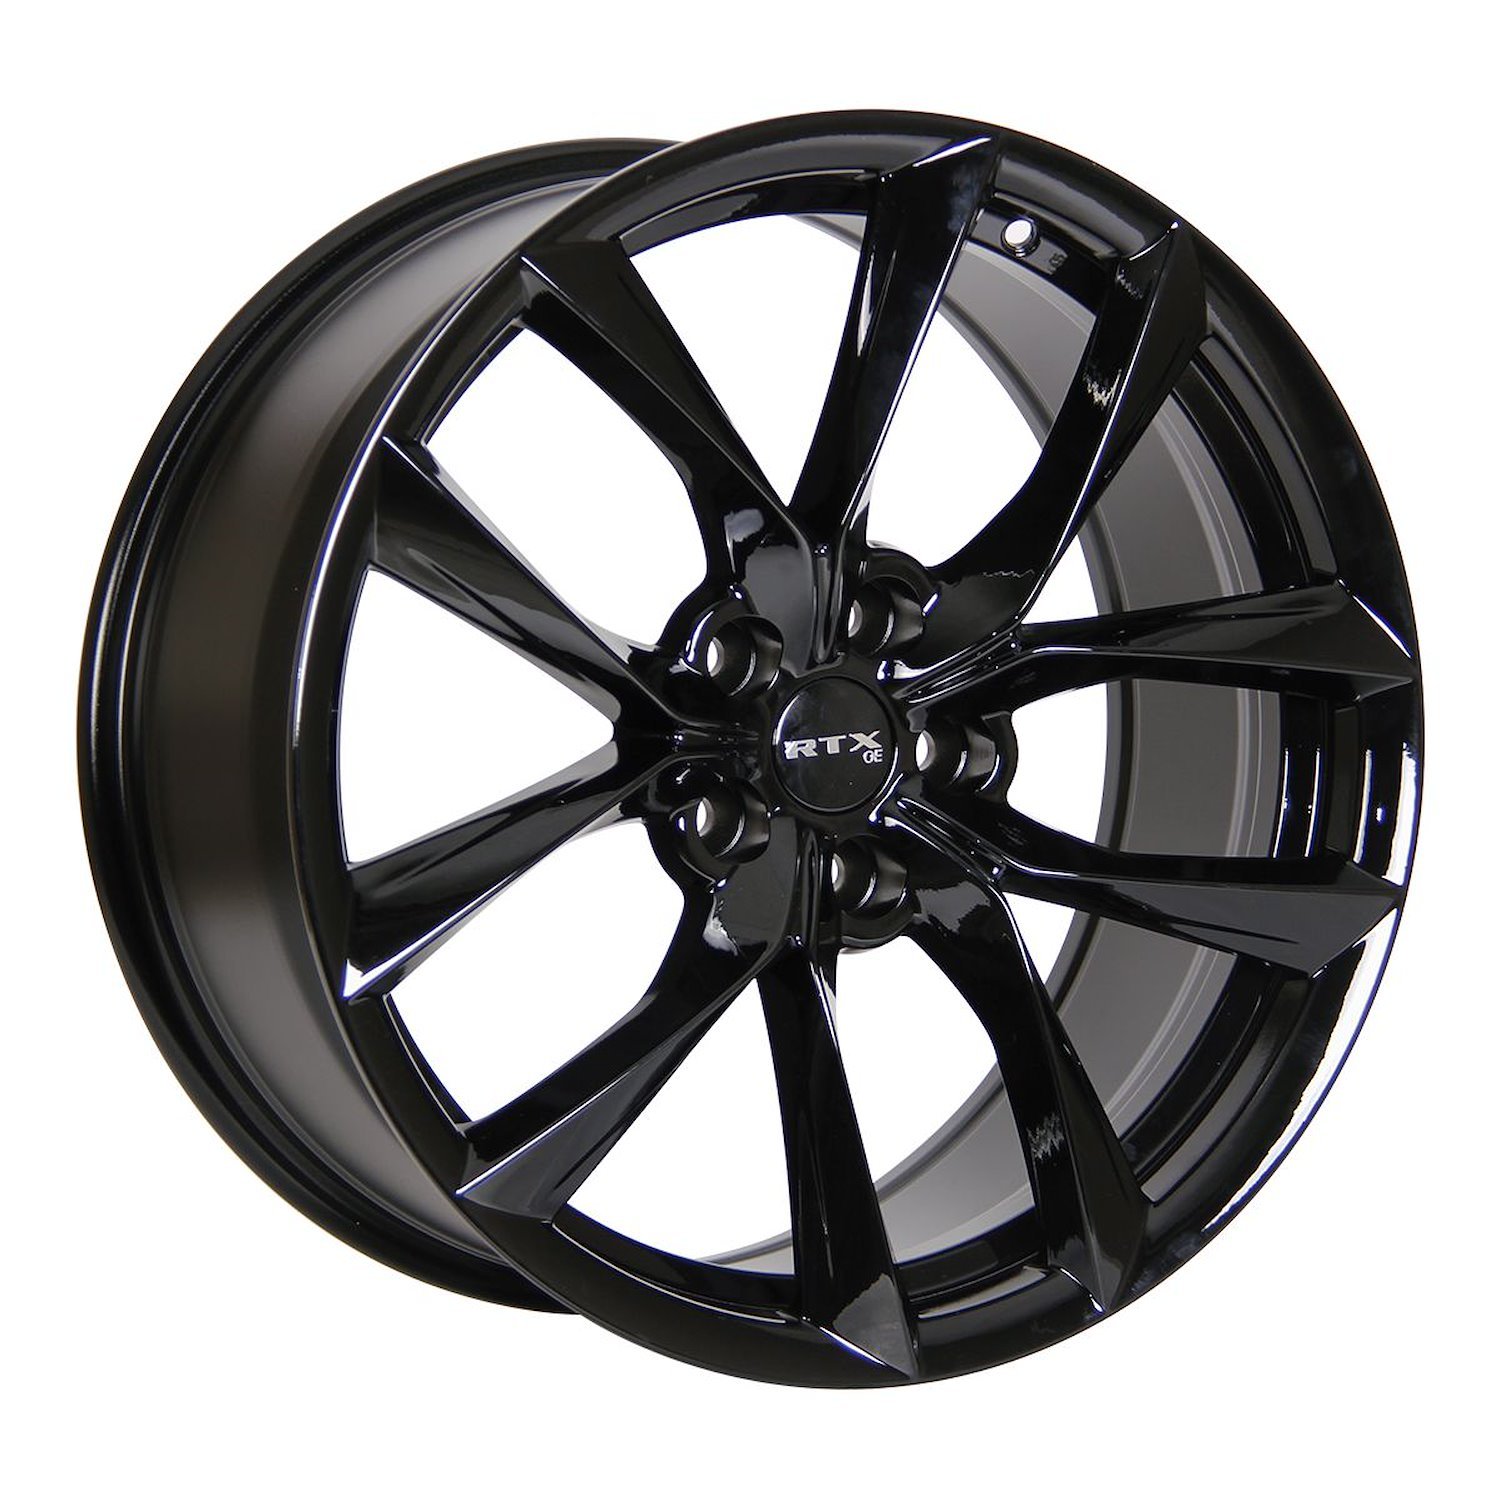 082734 OE-Series Spider Wheel [Size: 18" x 8.50"] Gloss Black Finish